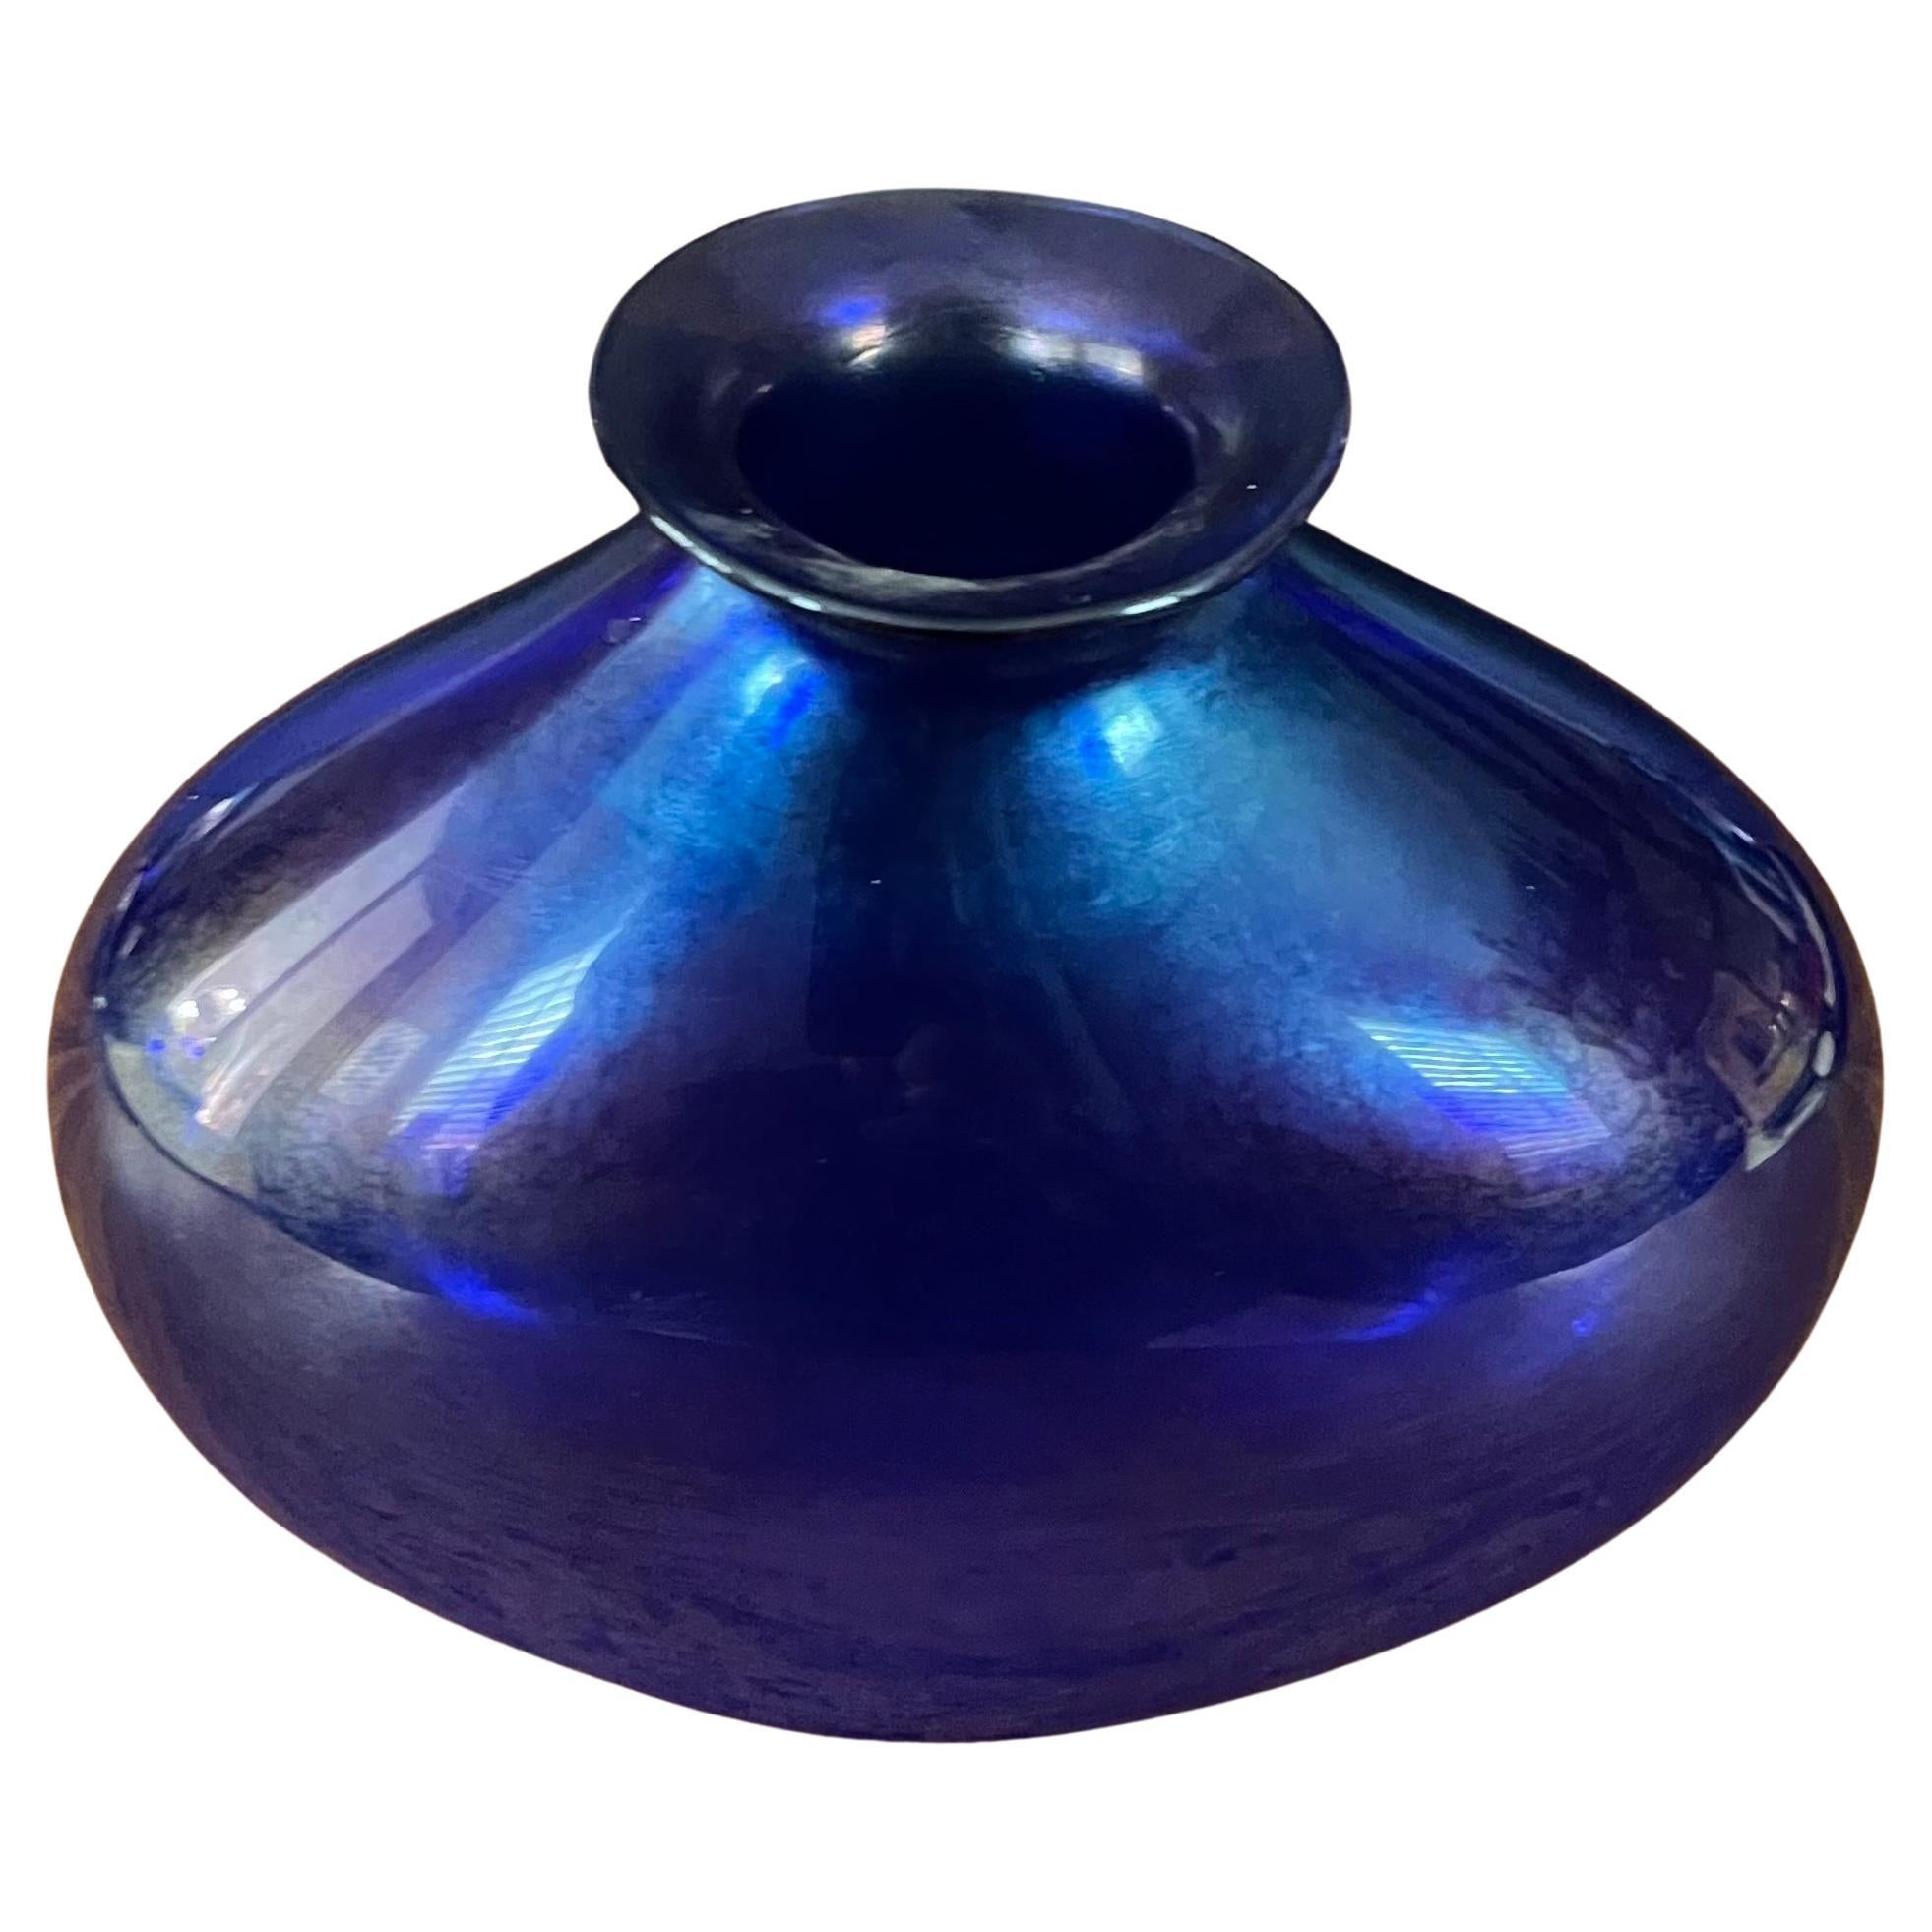 Iridescent Blue Aurene Art Glass Vase by Claude Duperron